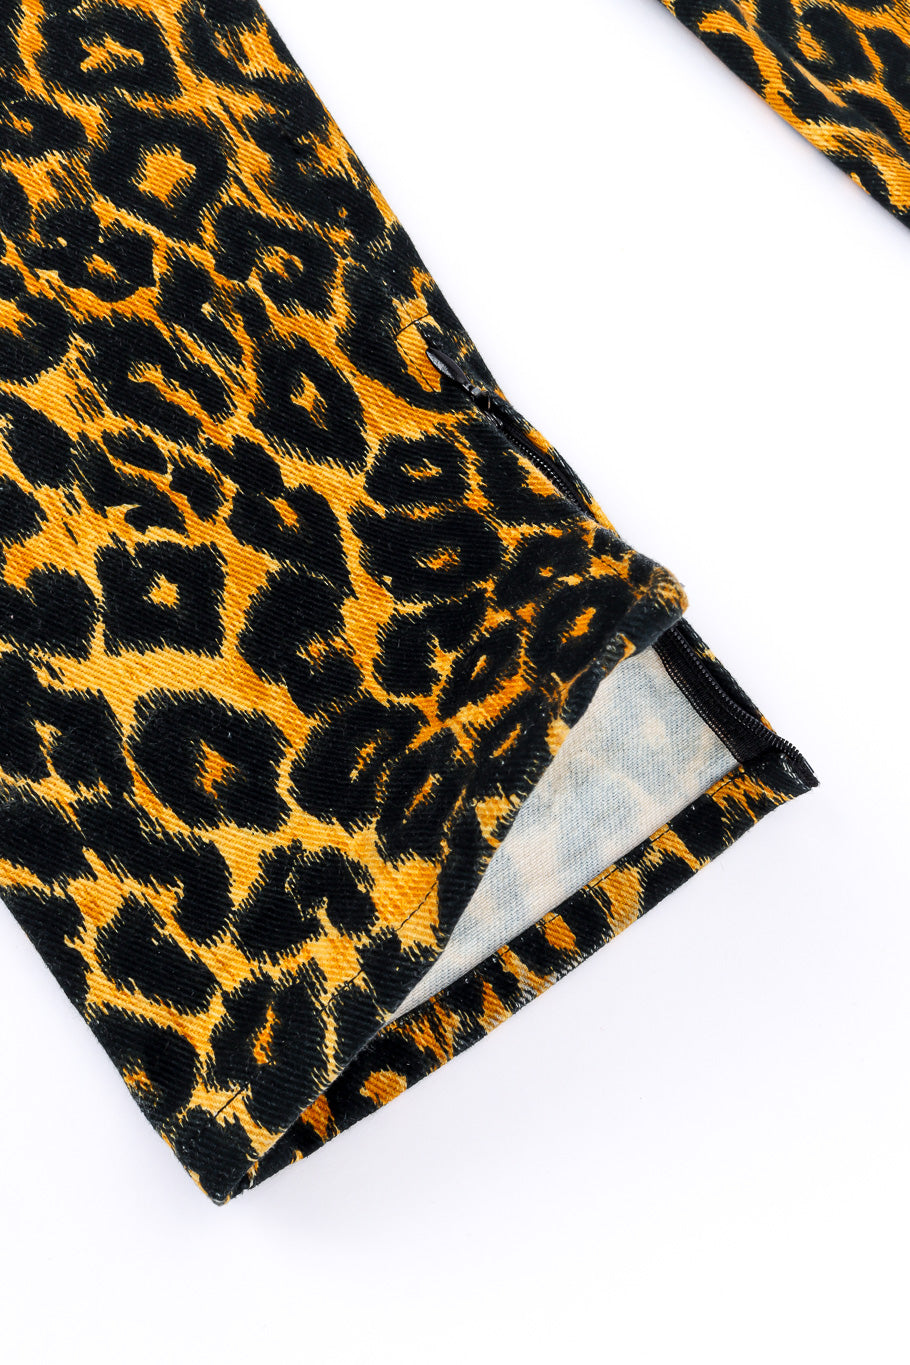 Versus Versace Leopard Print Denim Pant zip pull at hem closeup @Recessla